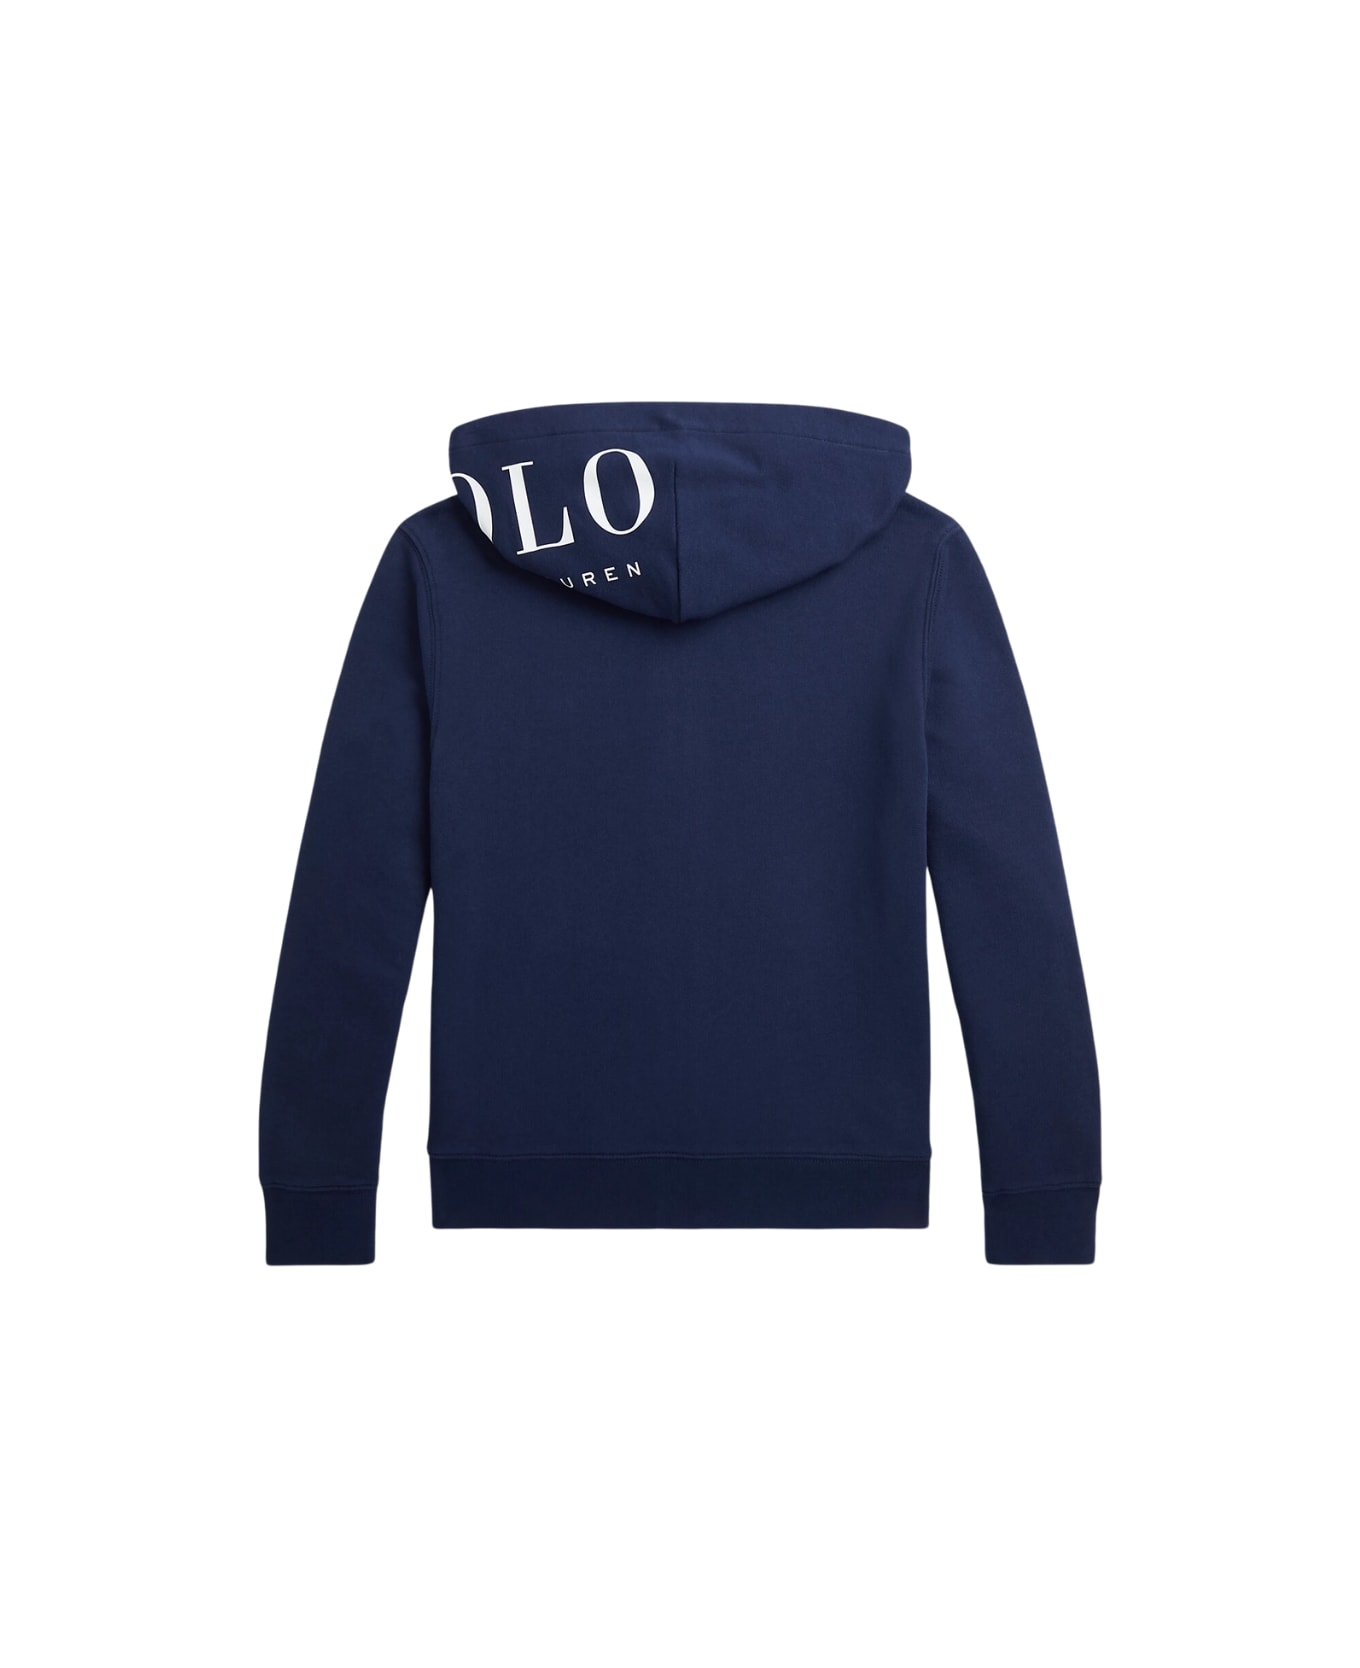 Polo Ralph Lauren Fz Hood Knit Shirts Sweatshirt - Newport Navy